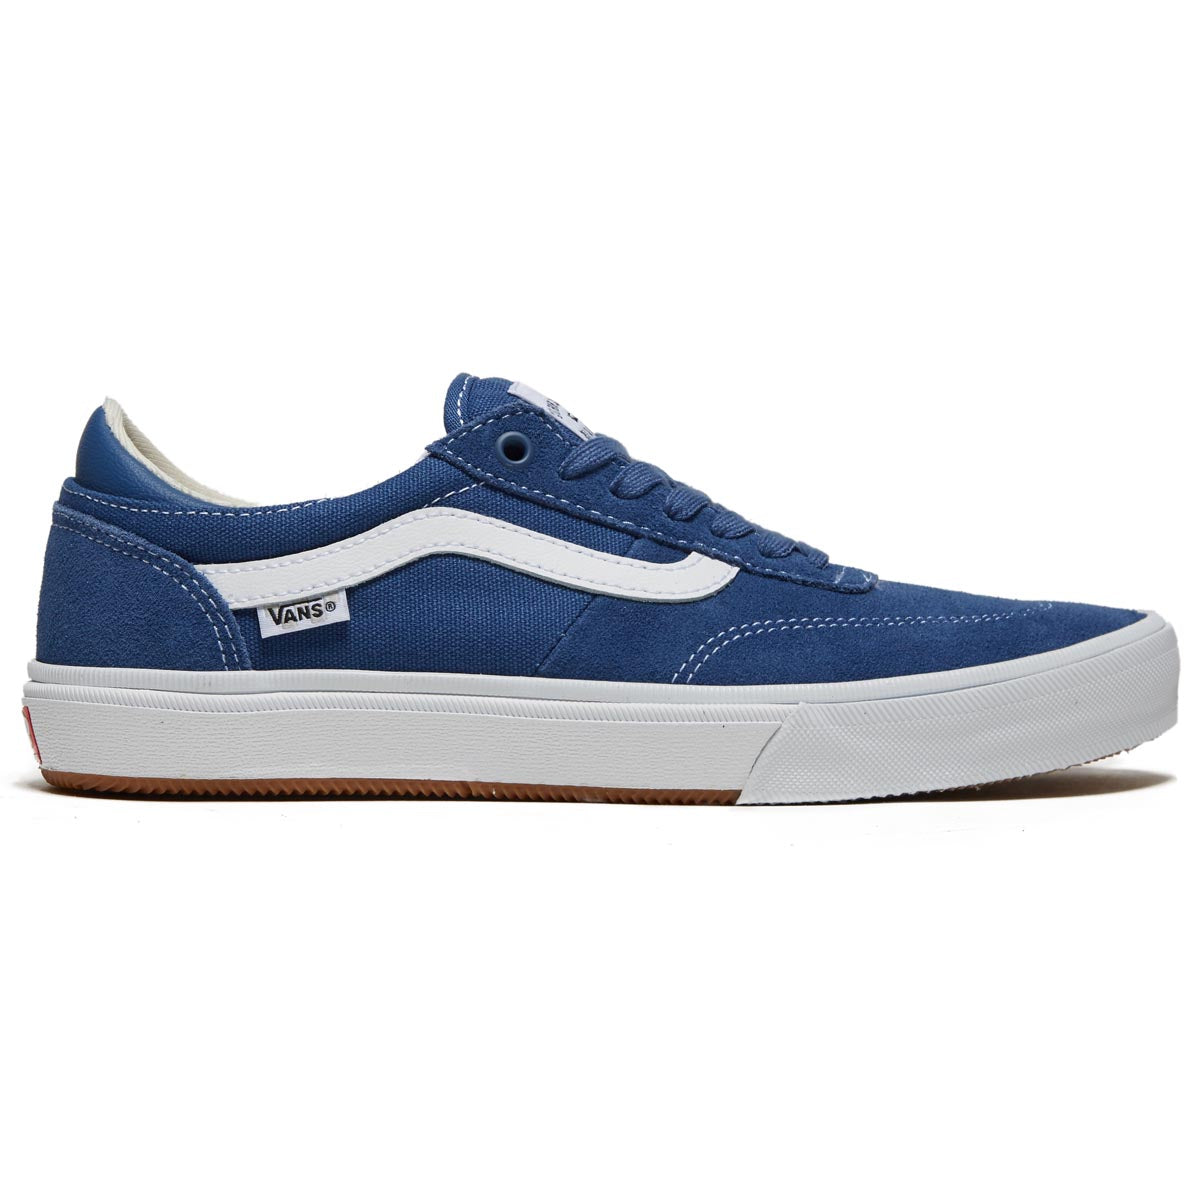 Vans Gilbert Crockett Shoes - Blue/White image 1